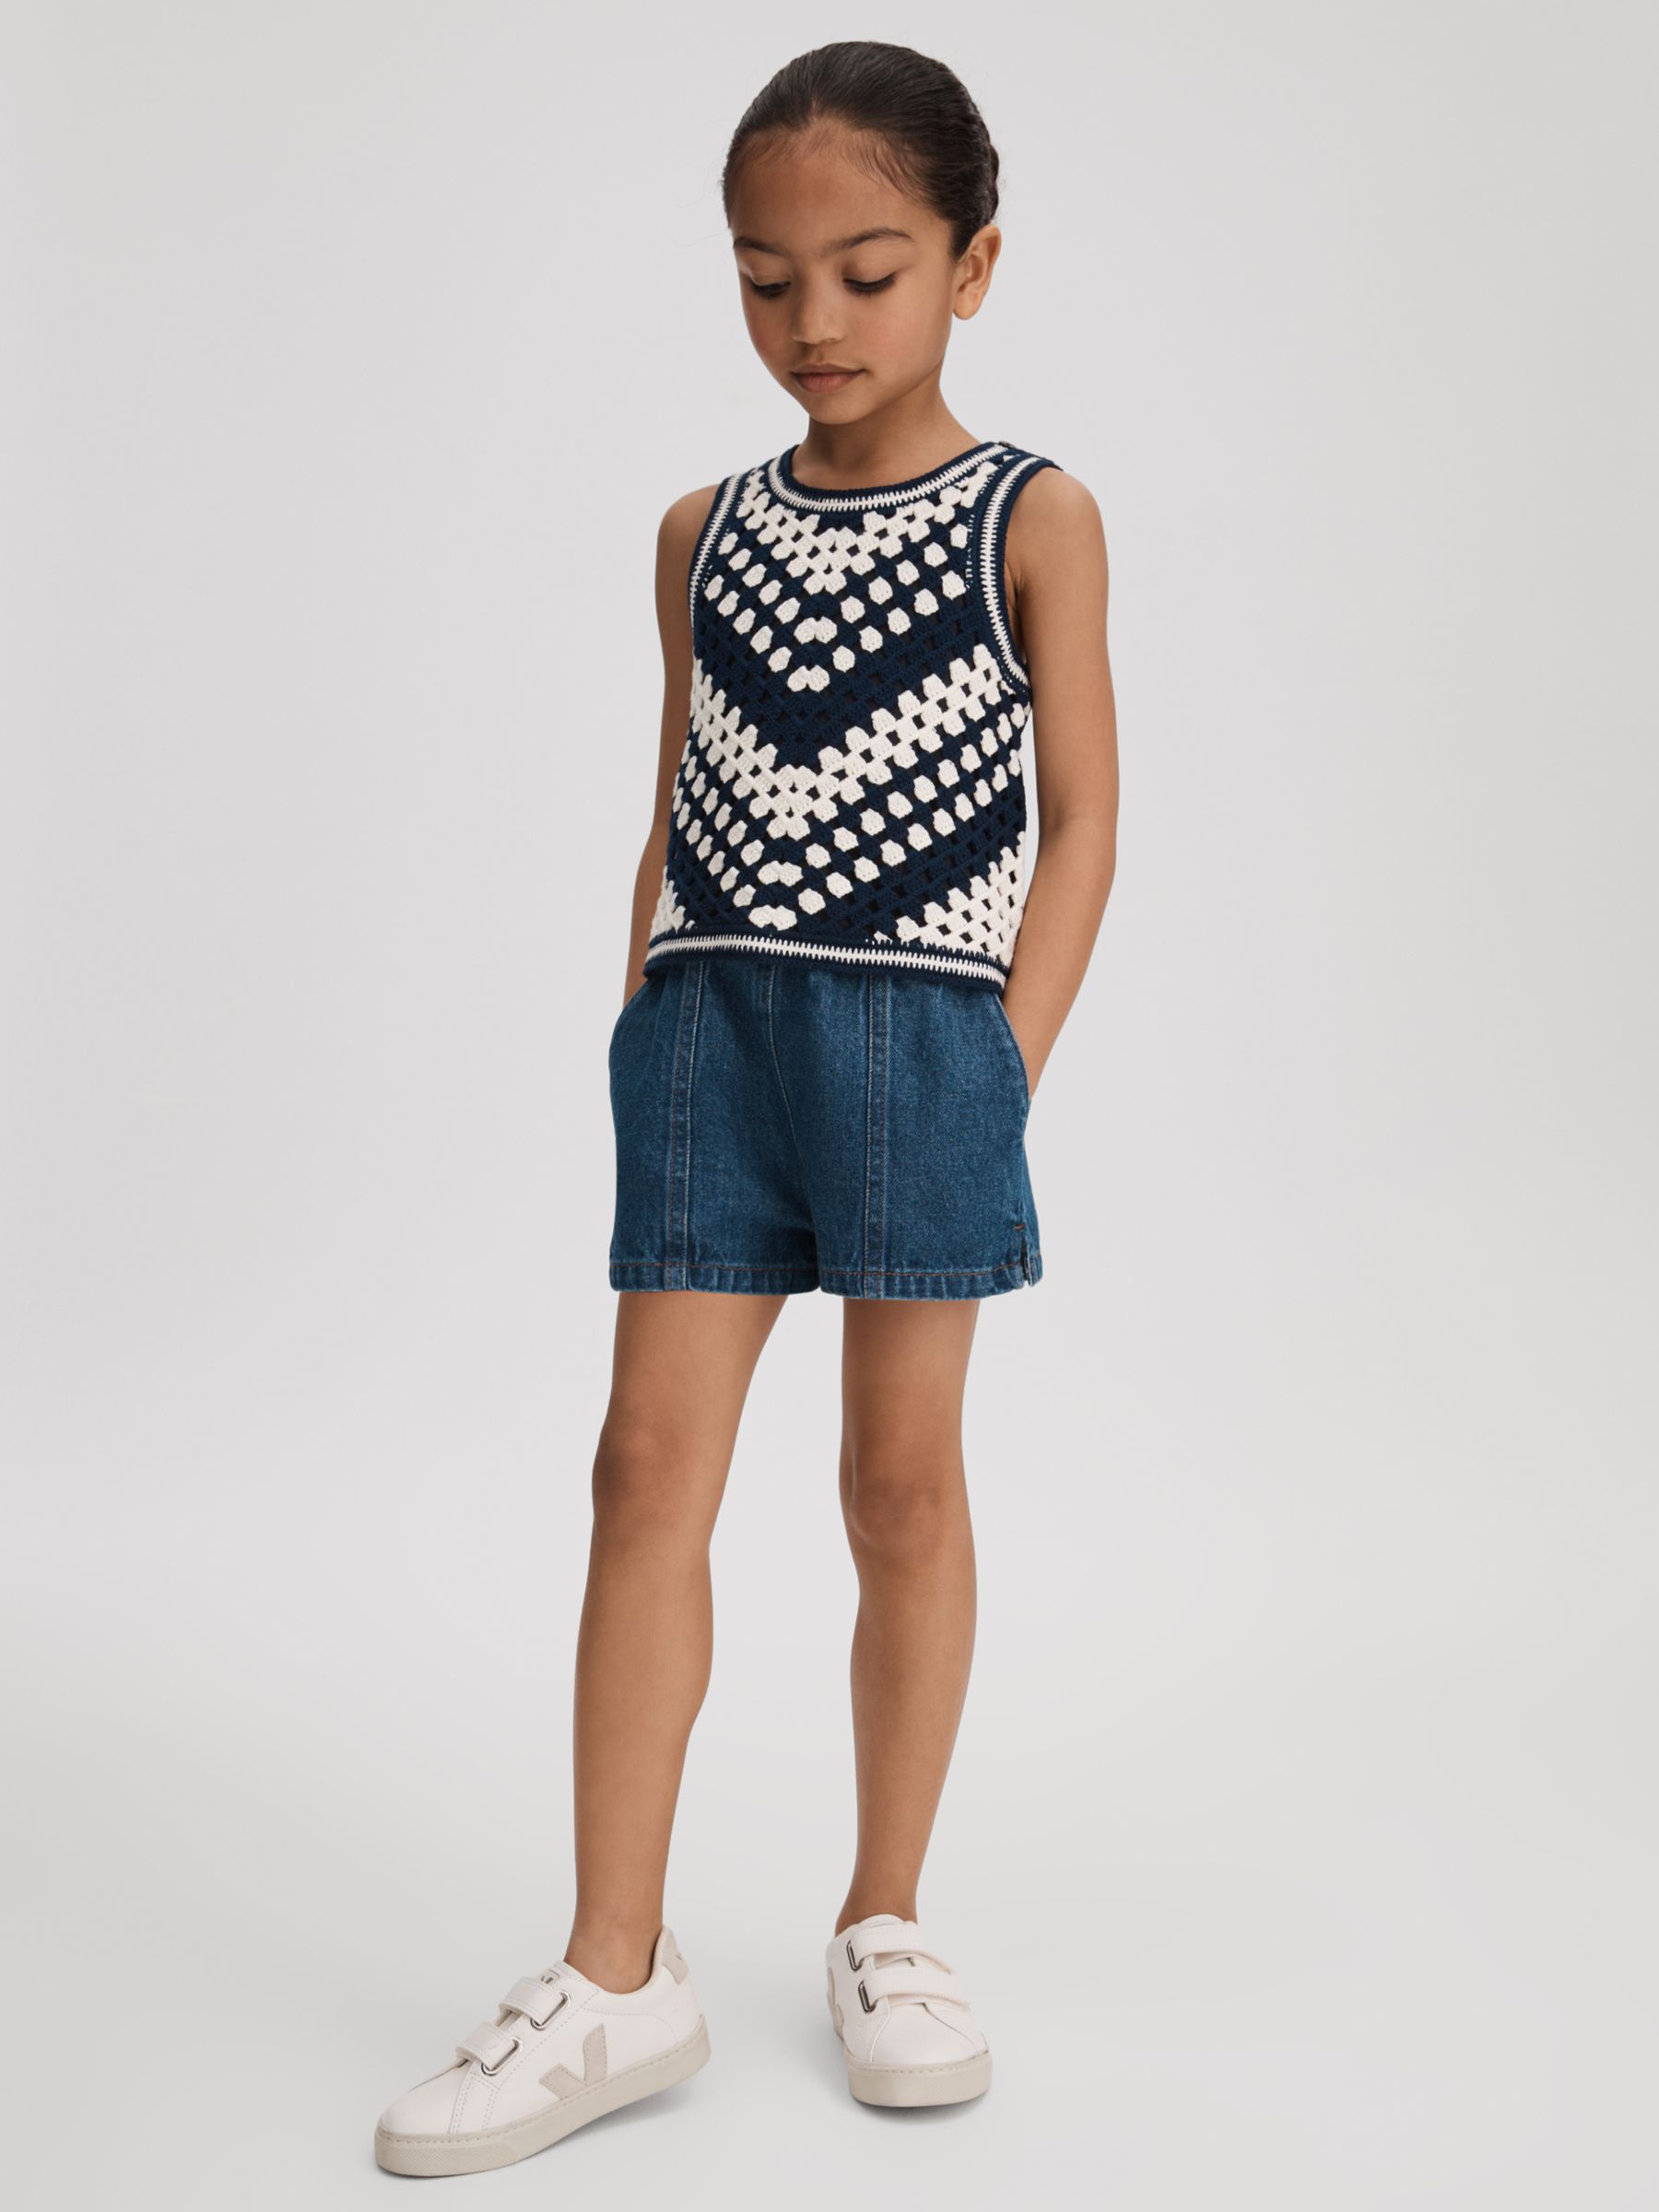 Reiss Kids' Sabrina Textured Crochet Cotton Top, Navy/Ivory, 4-5 years